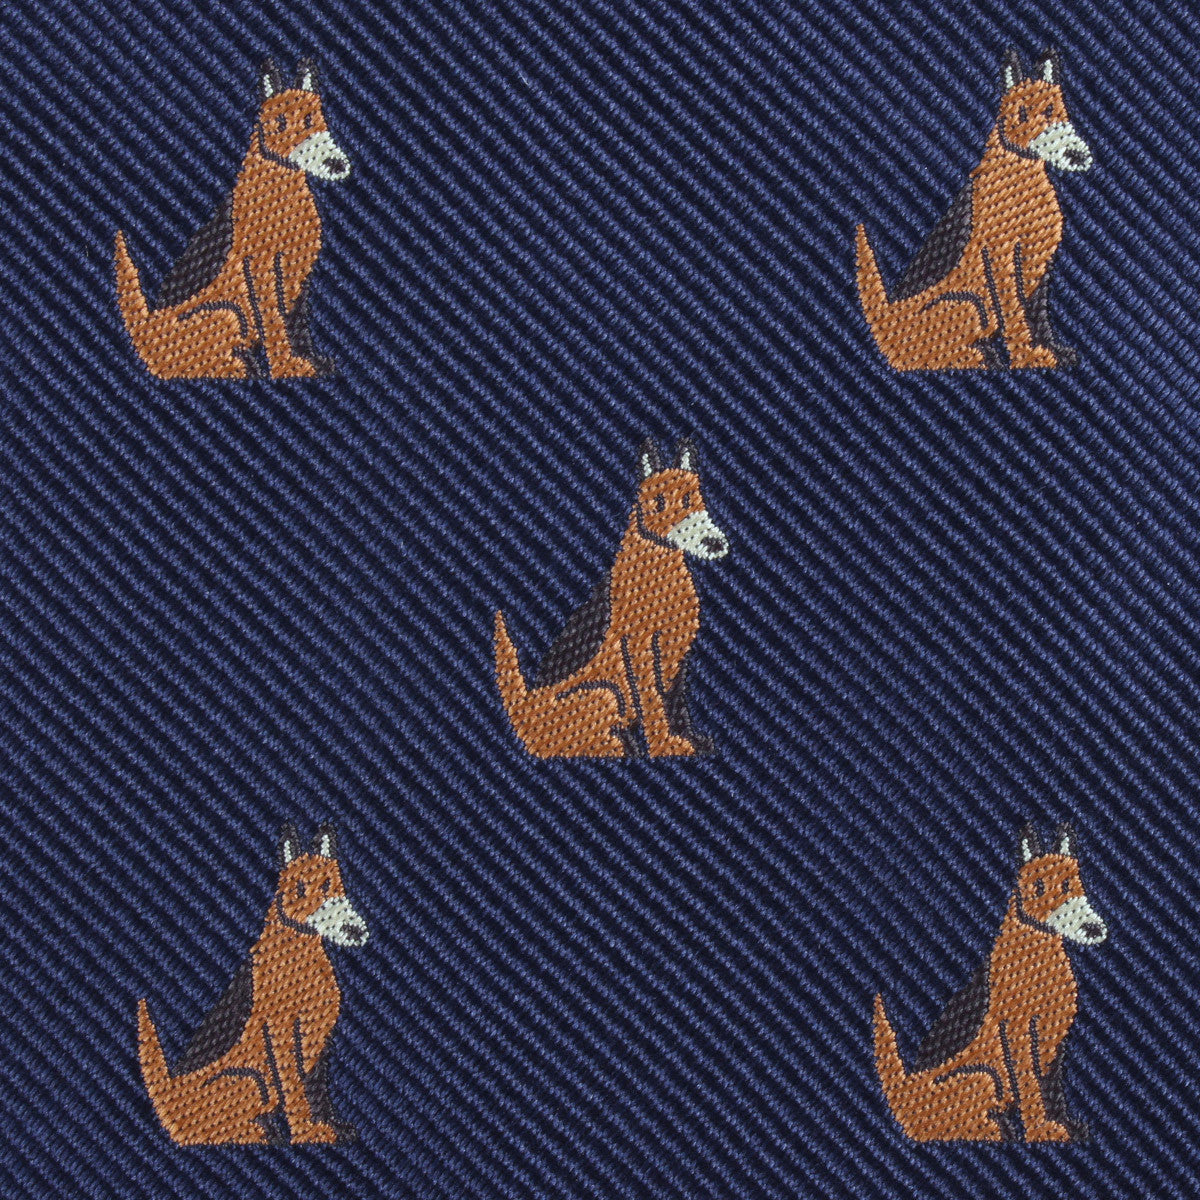 German Shepherd Dog Fabric Skinny Tie